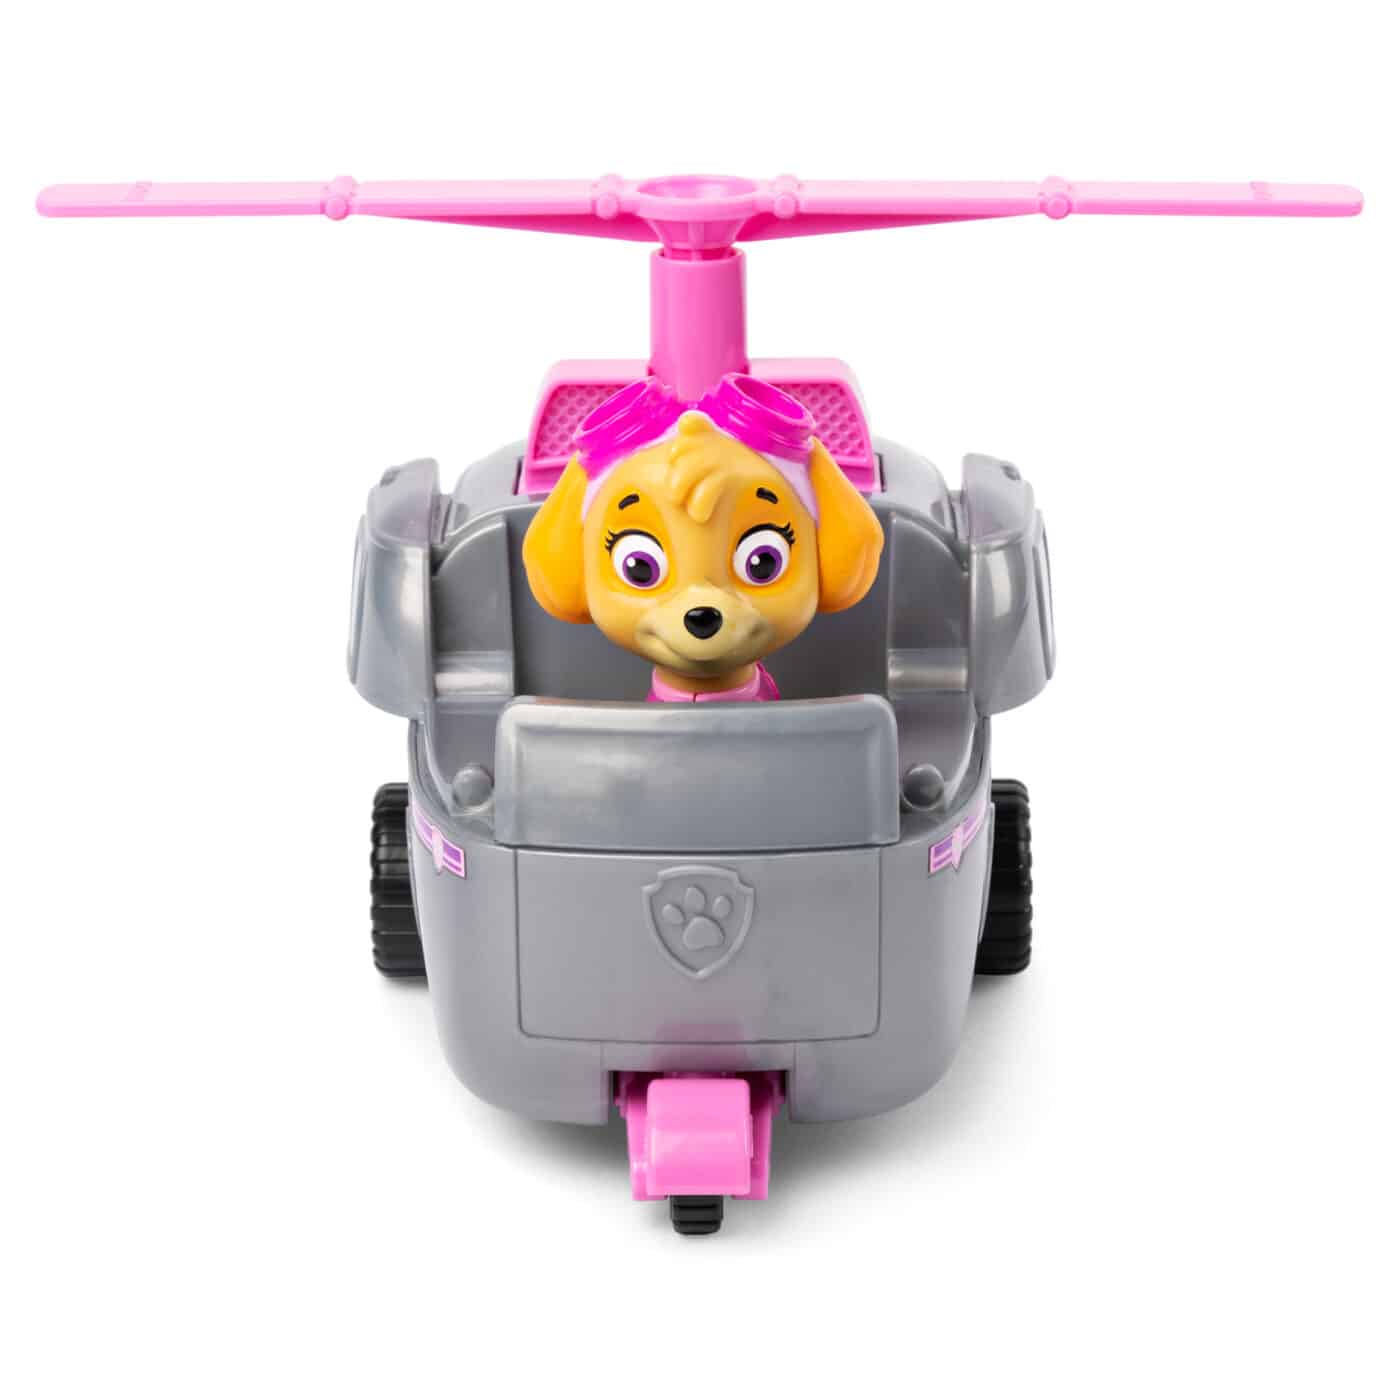 Nickelodeon - Paw Patrol Vehicle - Skye Helicopter1